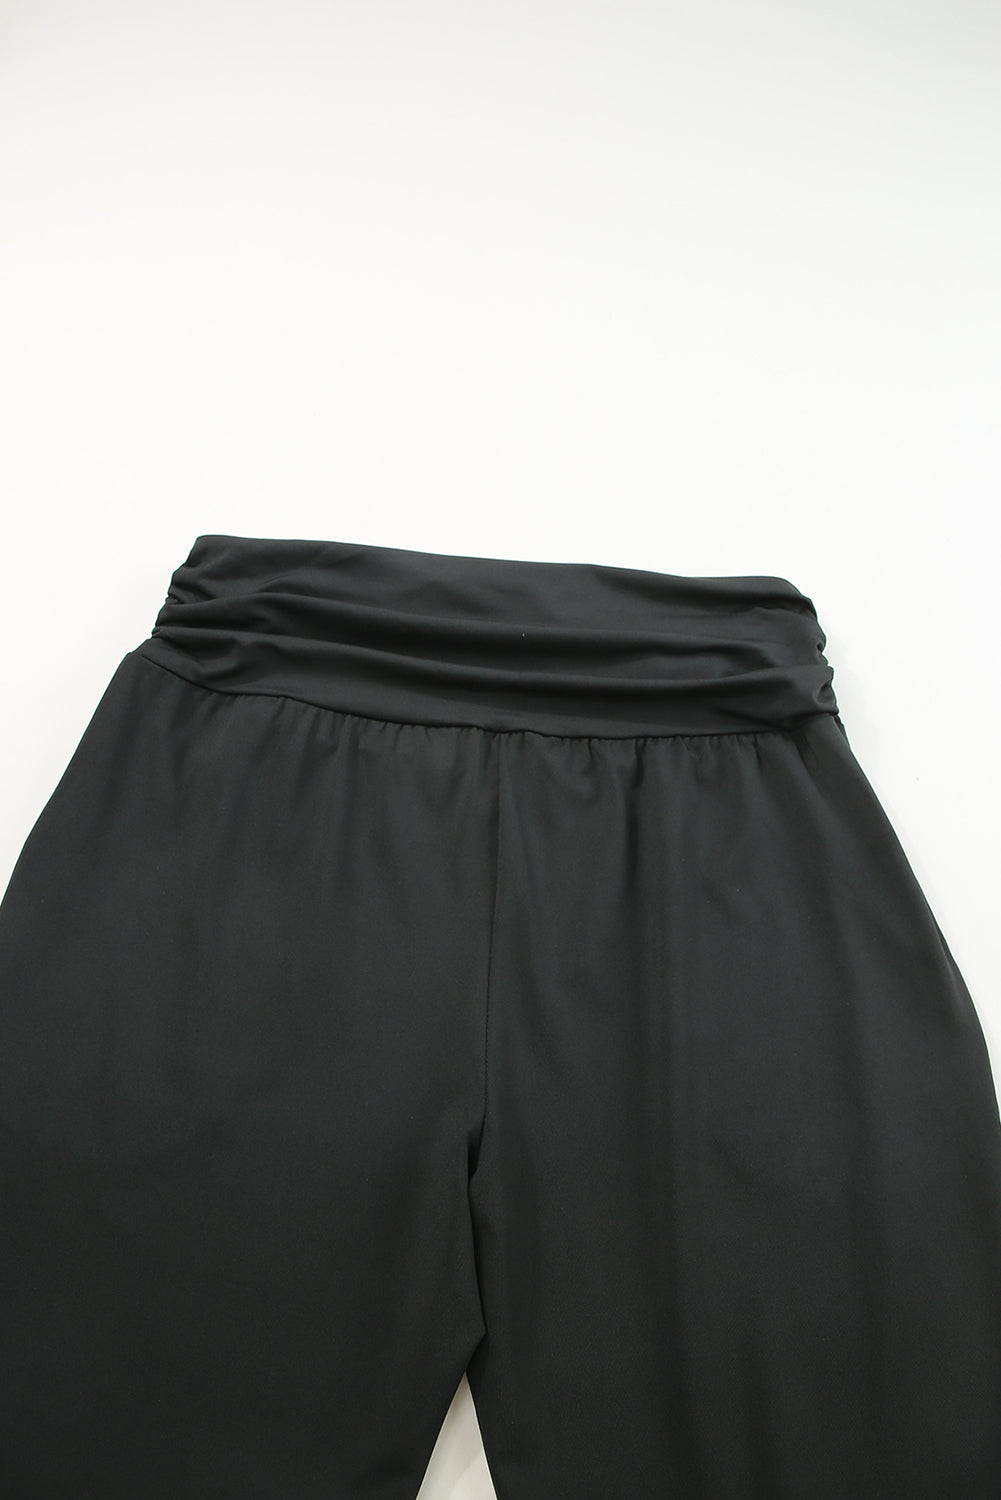 Black Plus Size High Waist Pocketed Skinny Pants